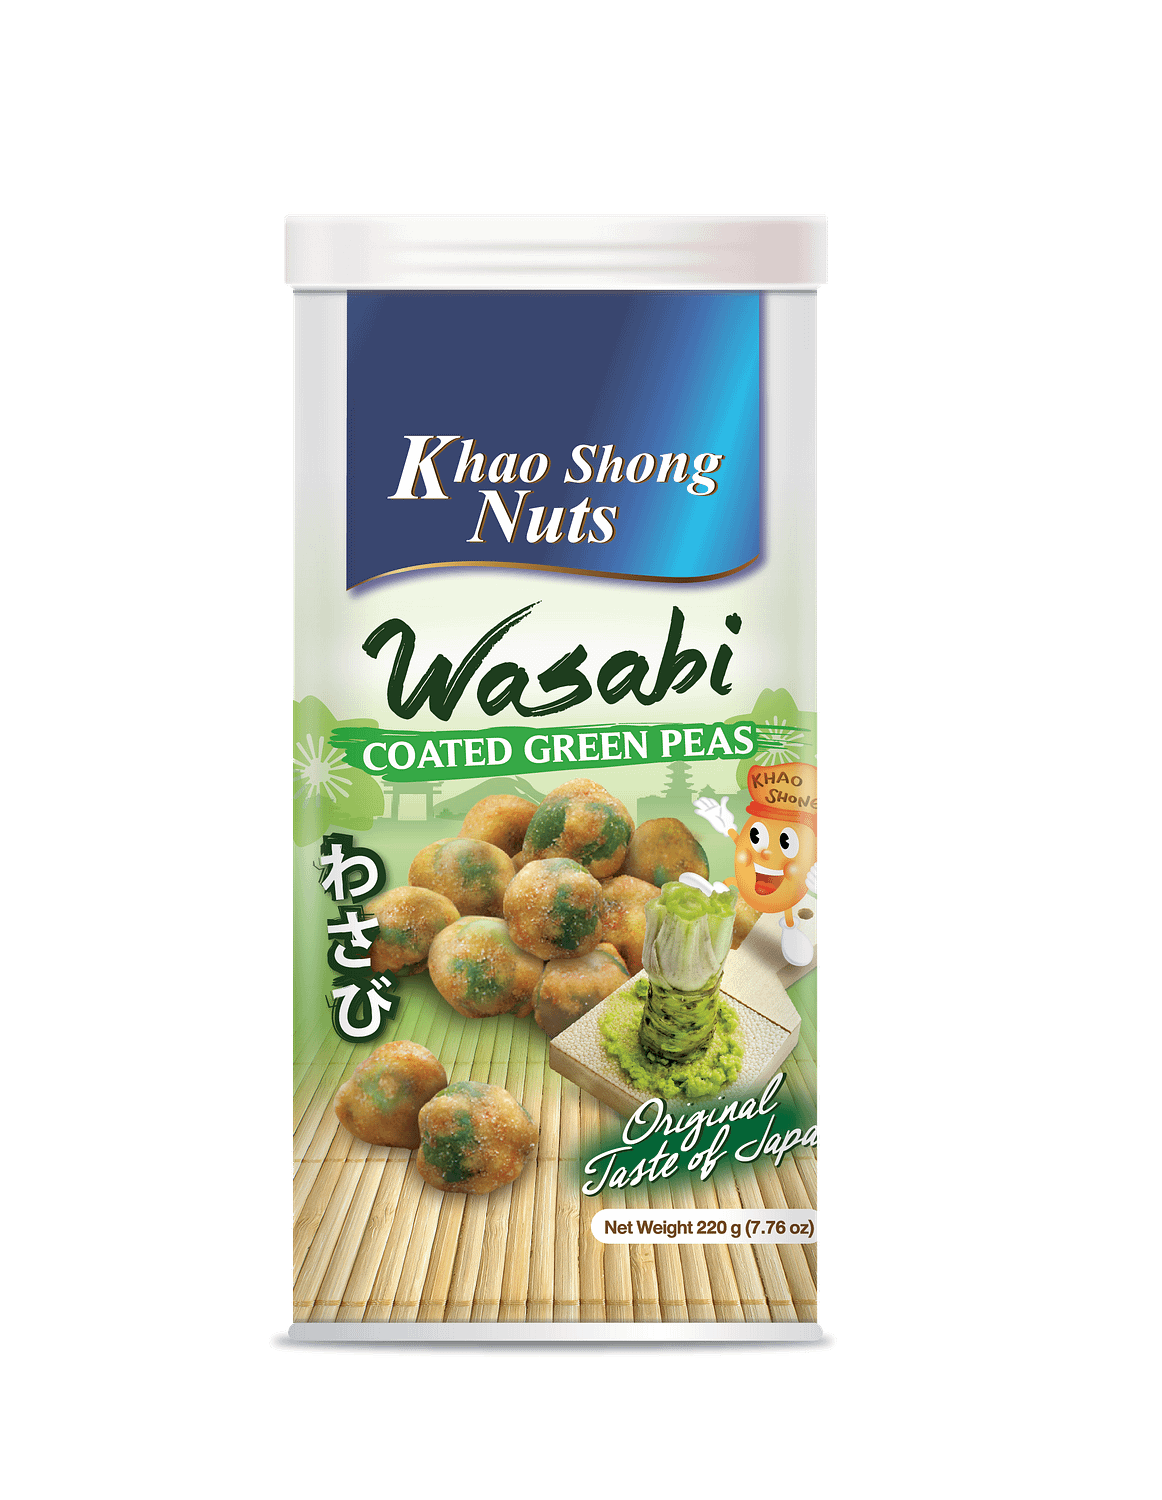 Khao Shong Nuts - Wasabi Coated Green Peas